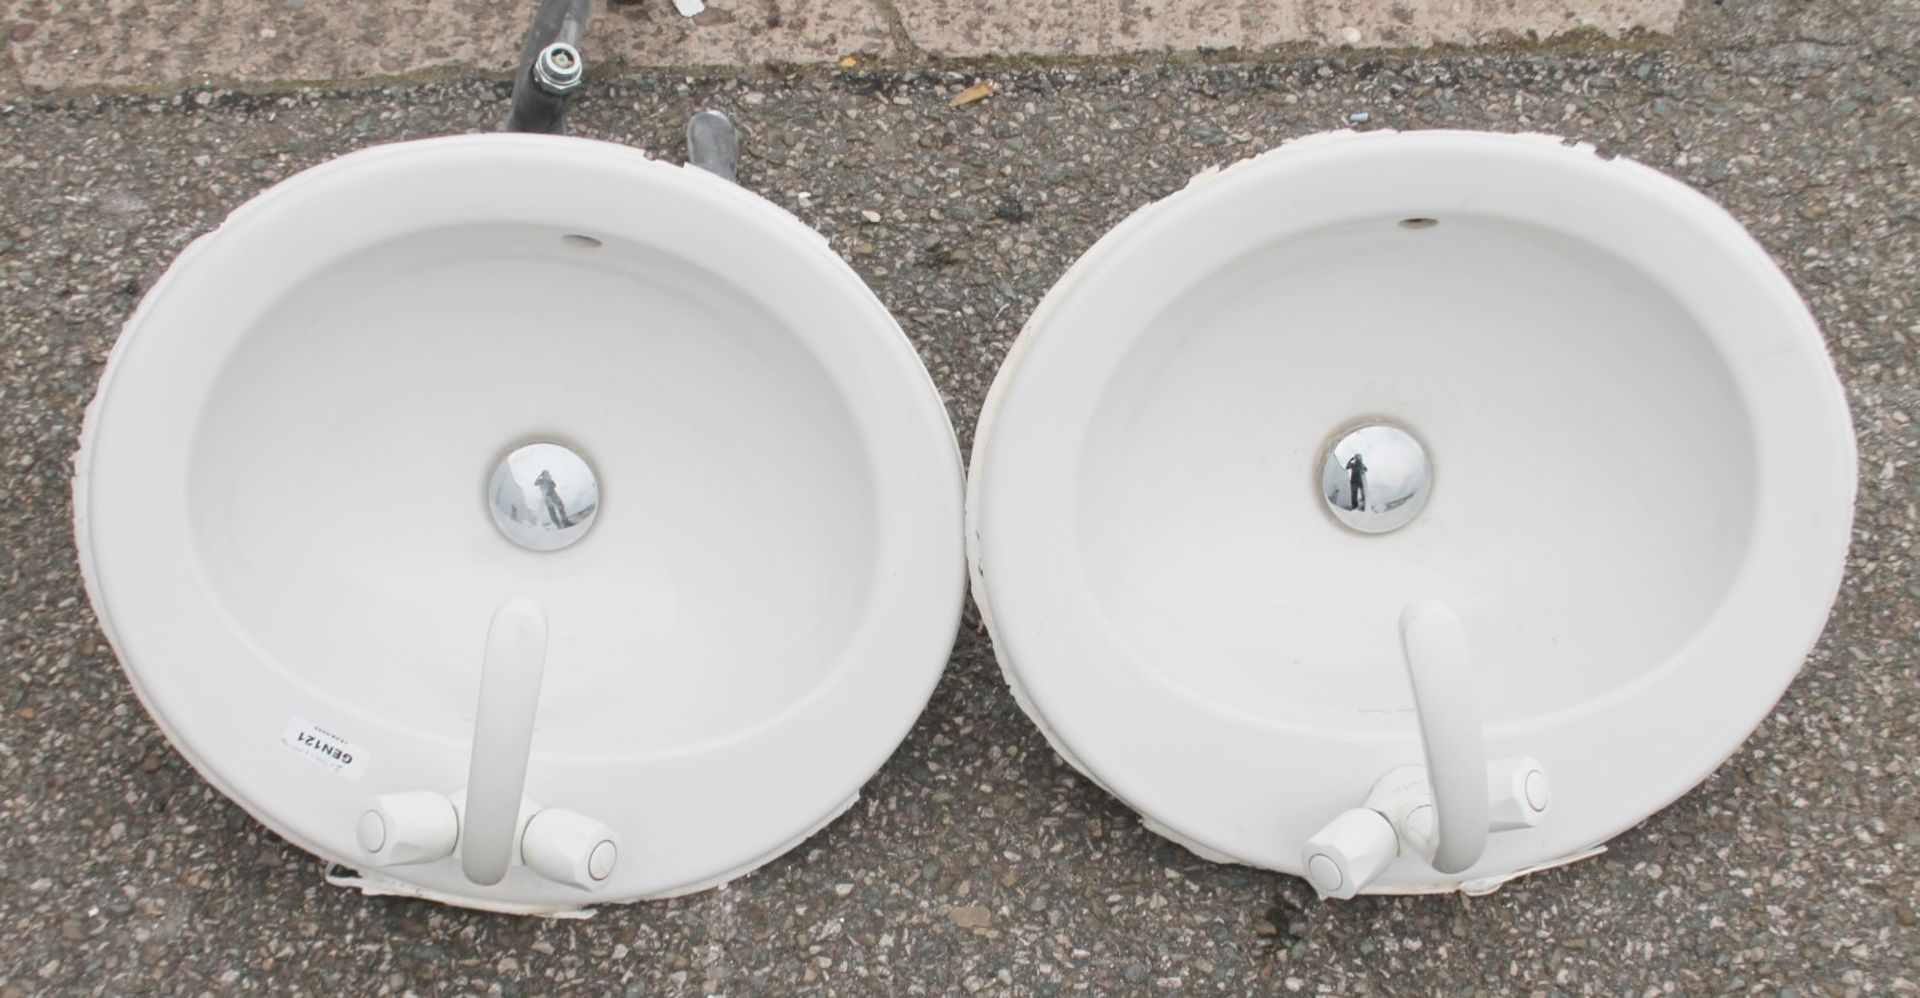 2 x Armitage Shanks Sink Basins With White Taps - Prestigious Shop Fittings - Ref: GEN121/G-IT - - Image 3 of 4